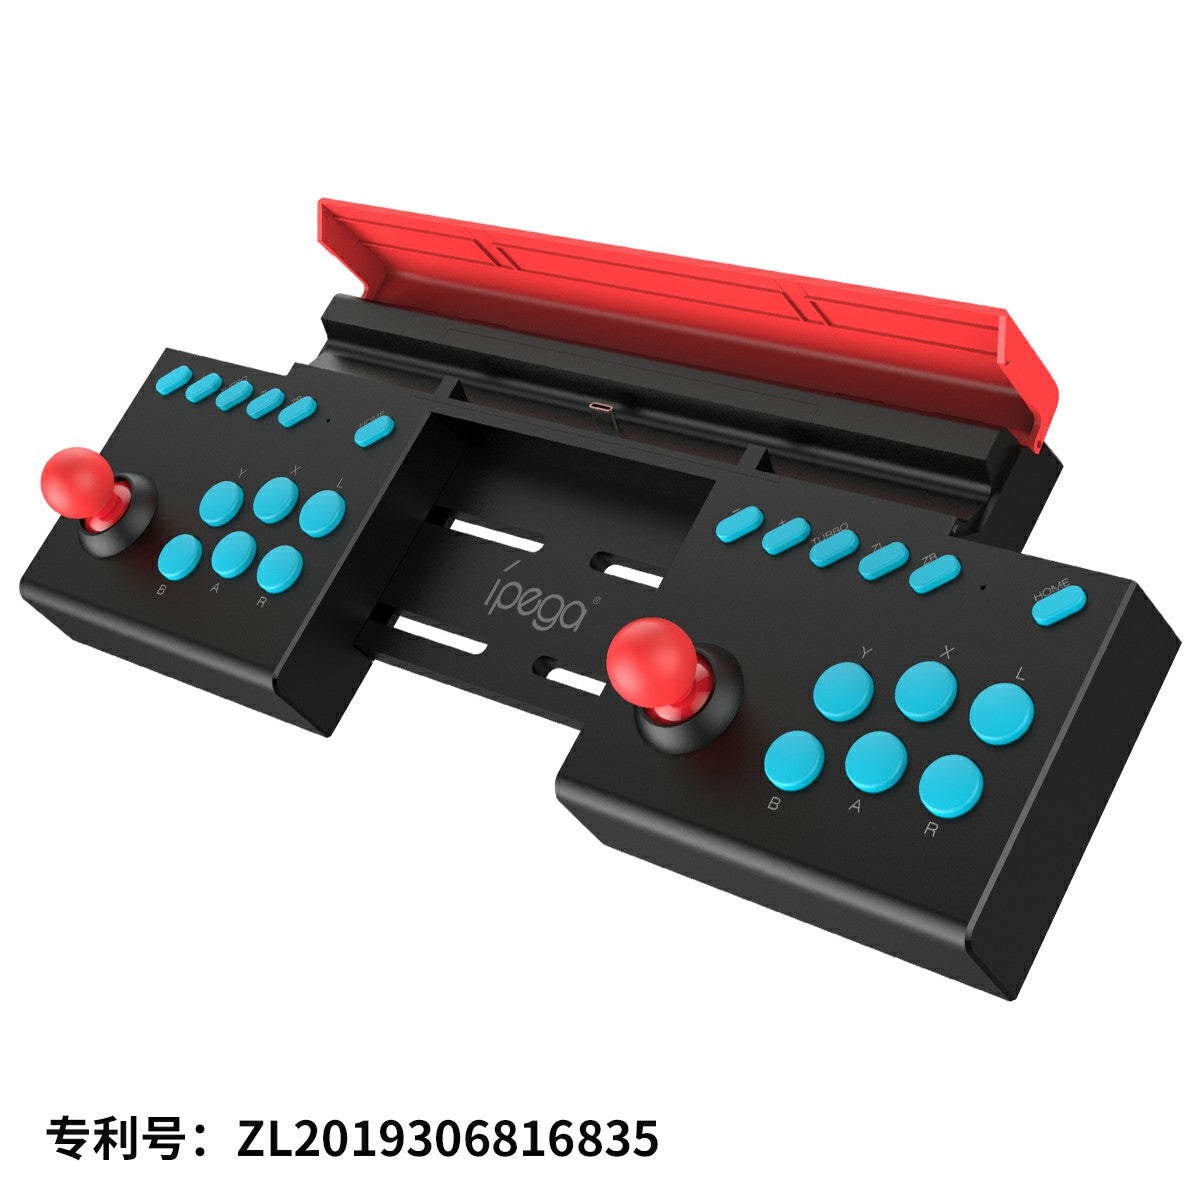 IPega Gamepad Arcade Joystick Controller Nintendo Switch